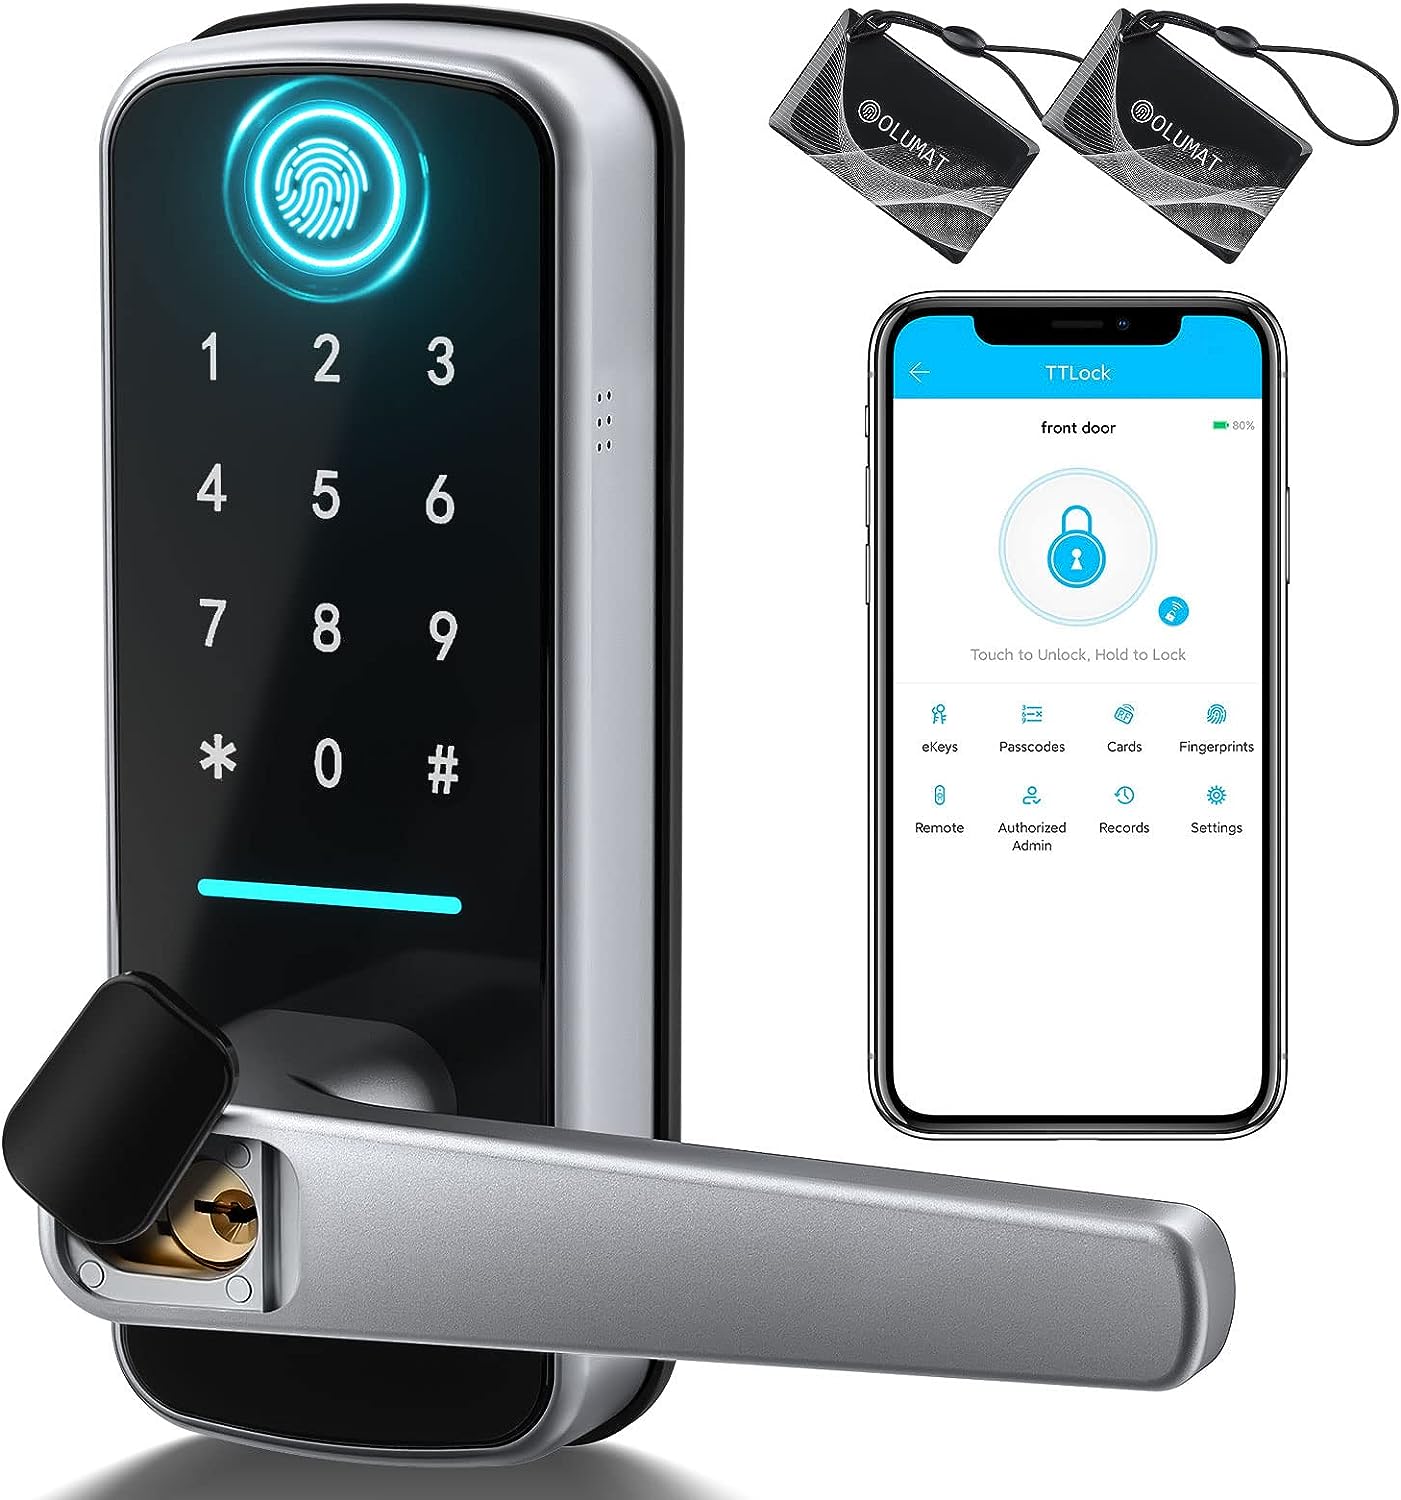 Smart door locks
                       Keyless entry locks
                       Home security technology 